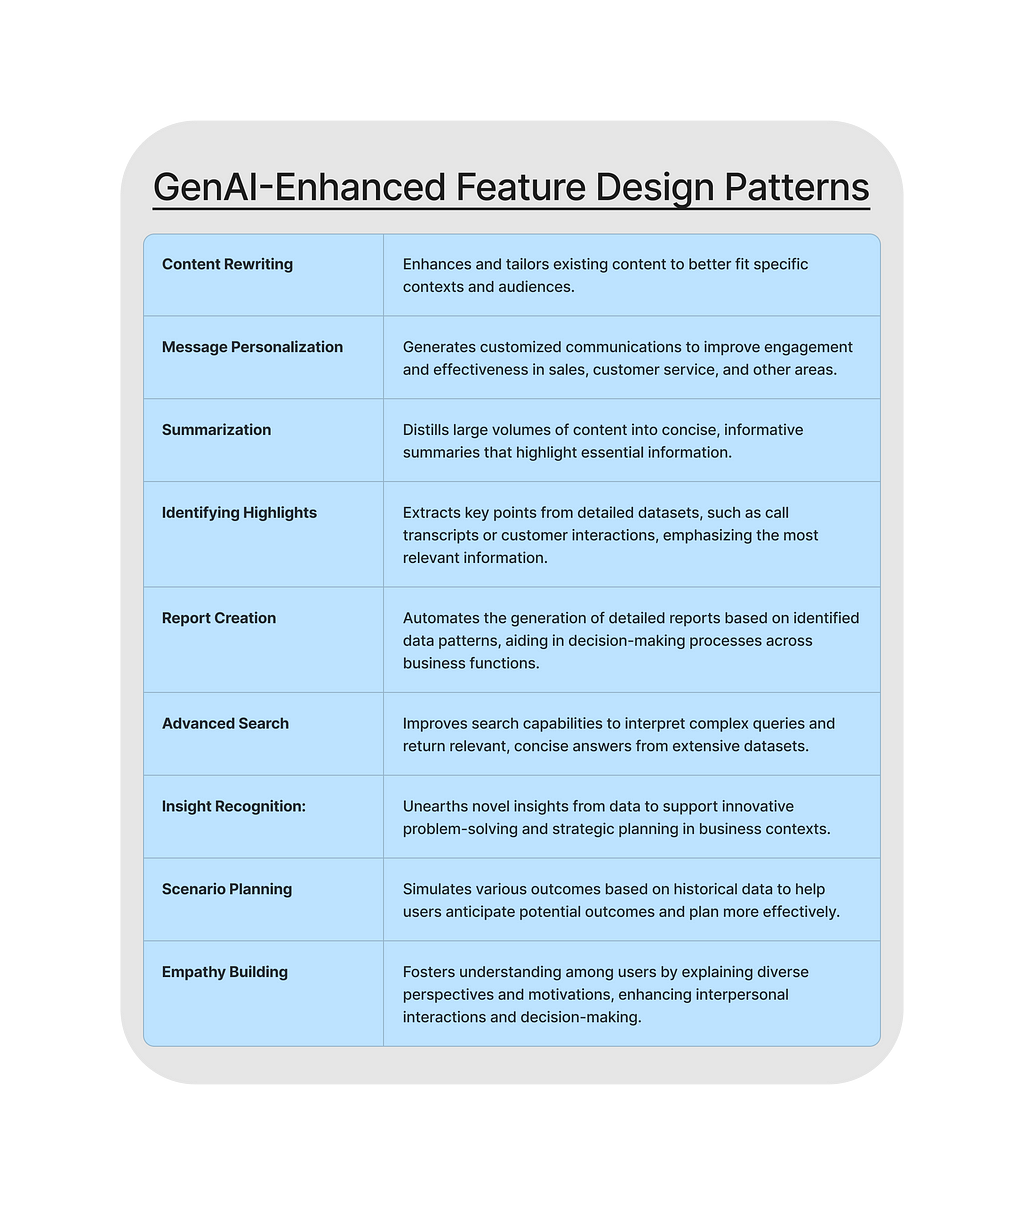 Table of the nine GenAI-Enhanced Design Patterns